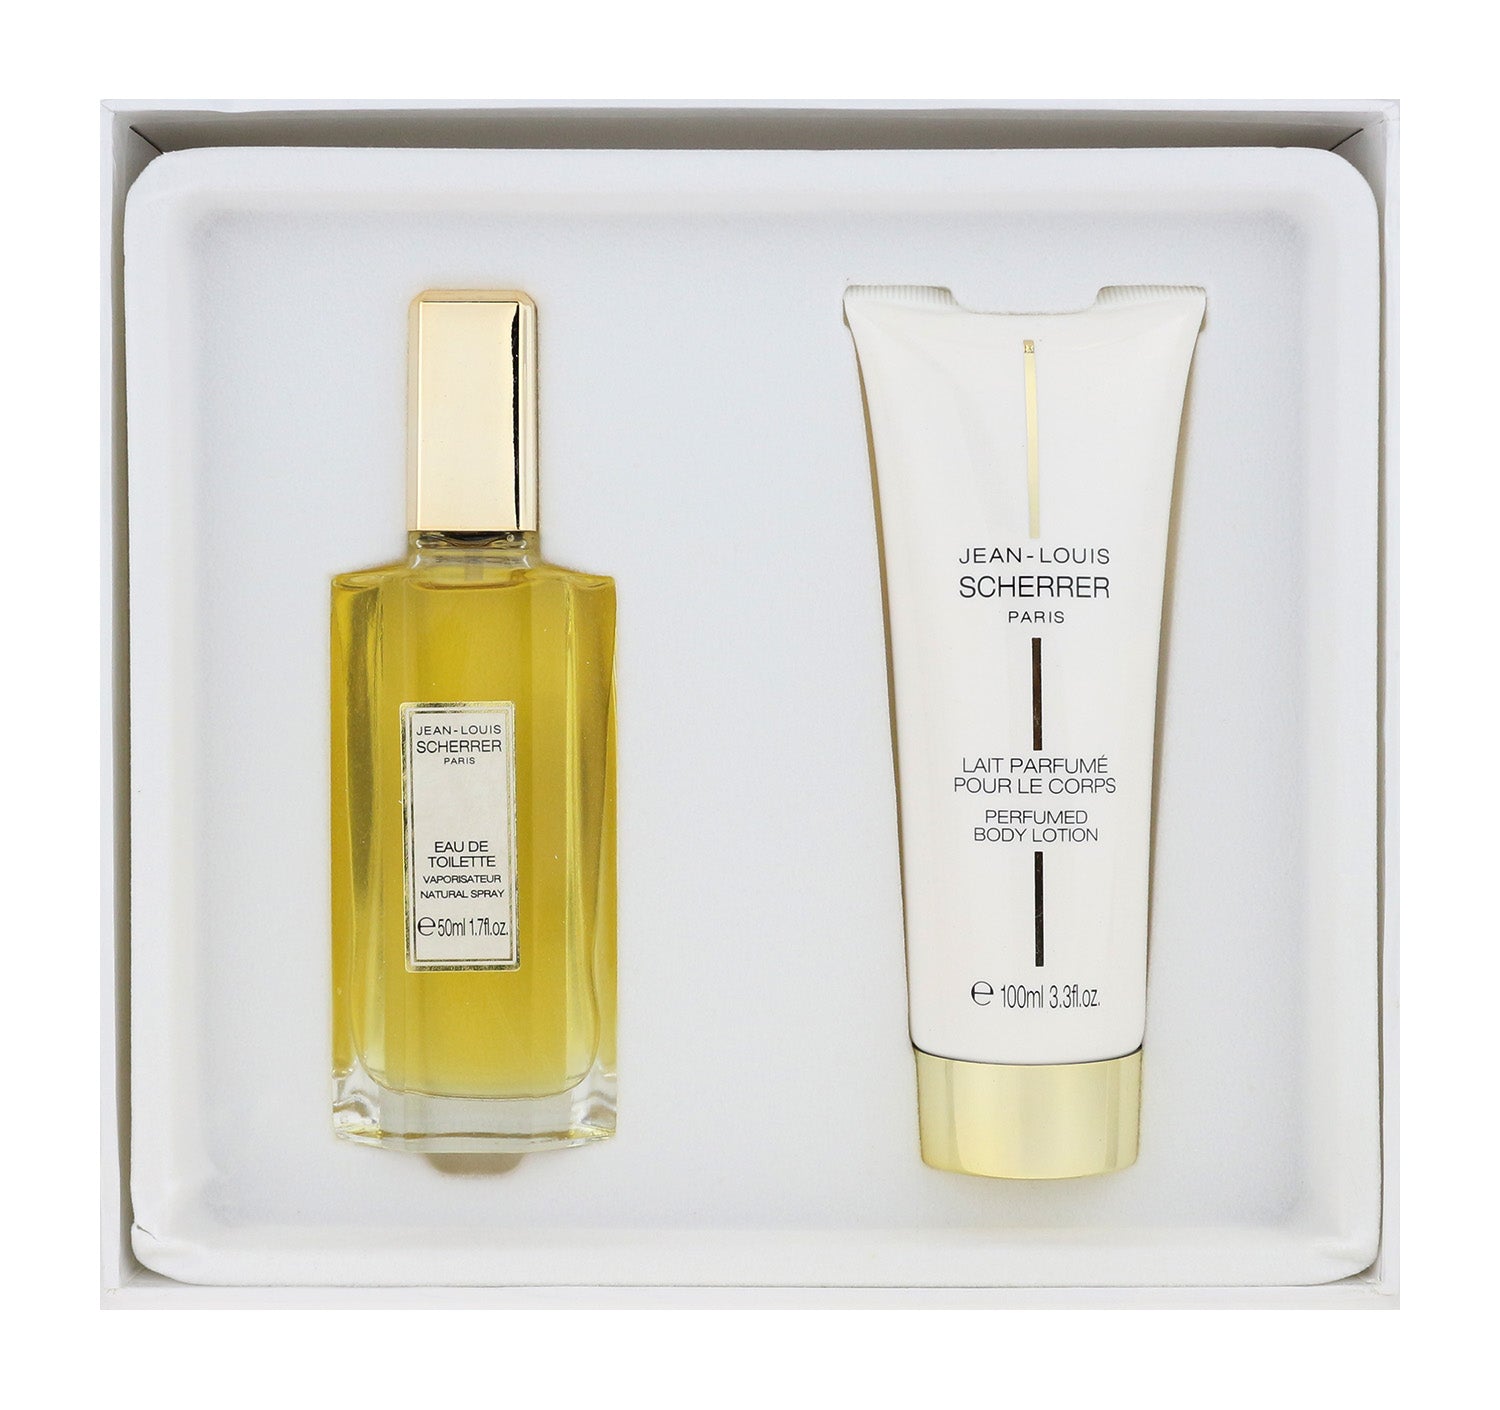 Jean-Louis Scherrer Jean-Louis Scherrer perfume - a fragrance for women 1979